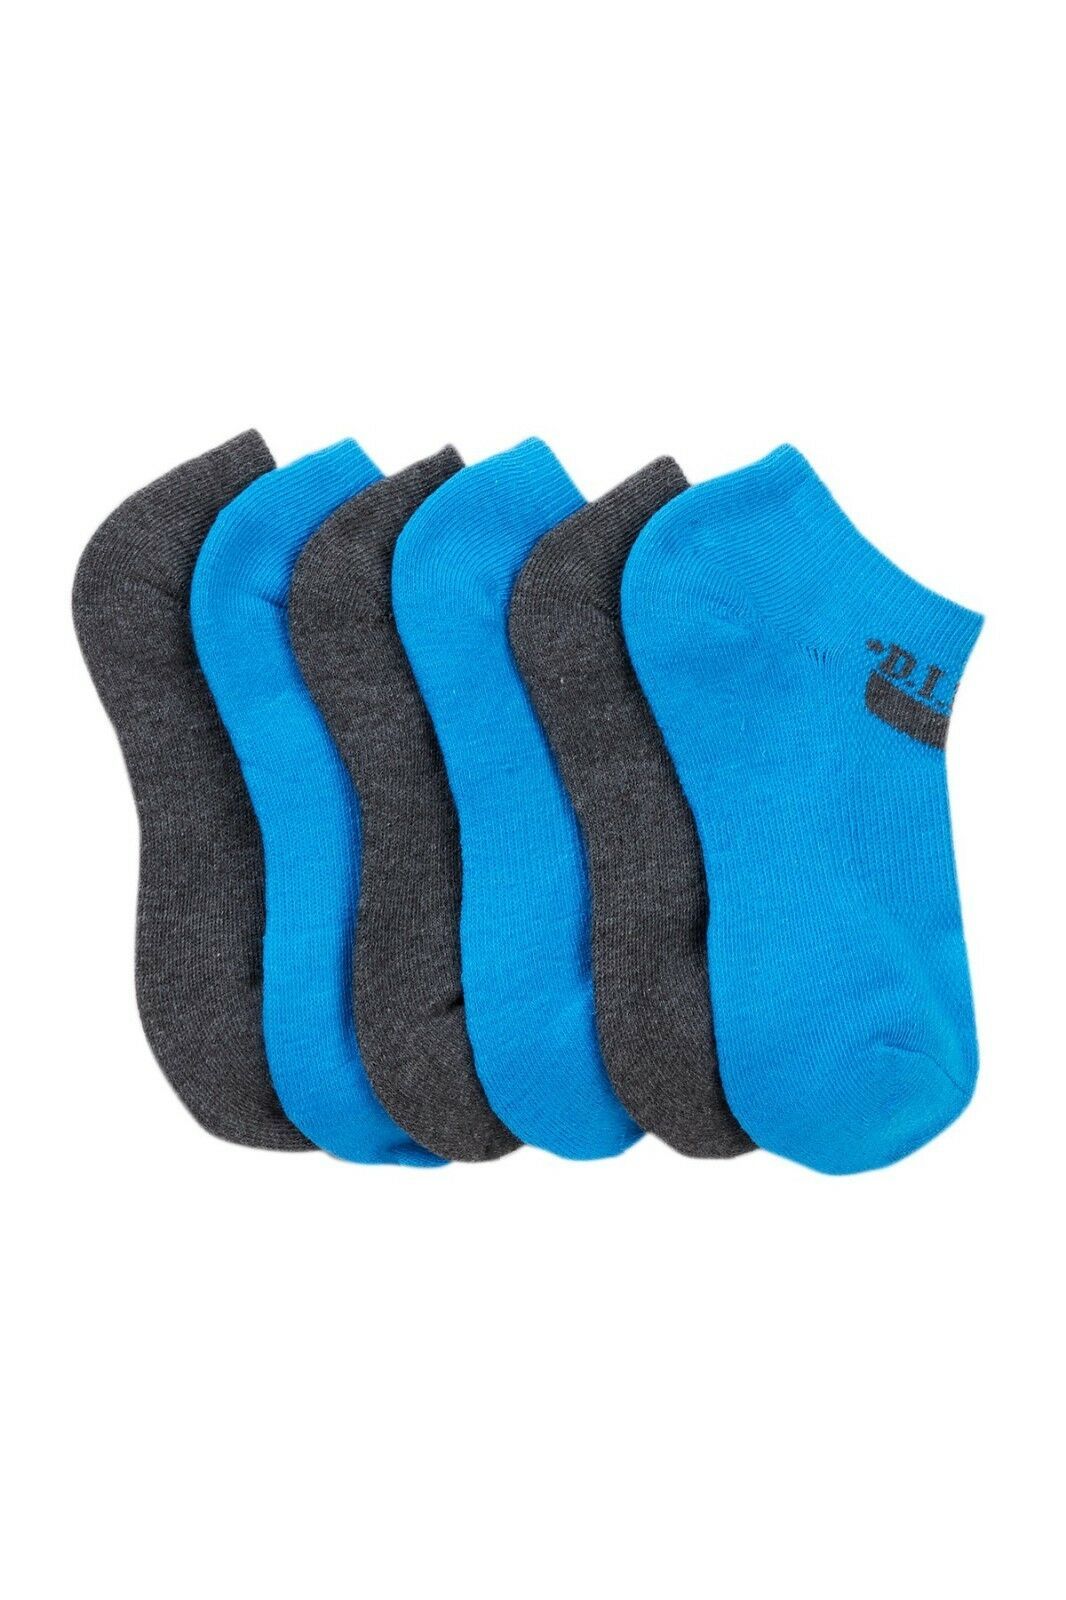 Diesel Boy's 6-Pack Athletic Low-Cut Socks, Blue / Charcoal, 7-8.5 Free Ship! - $64.32